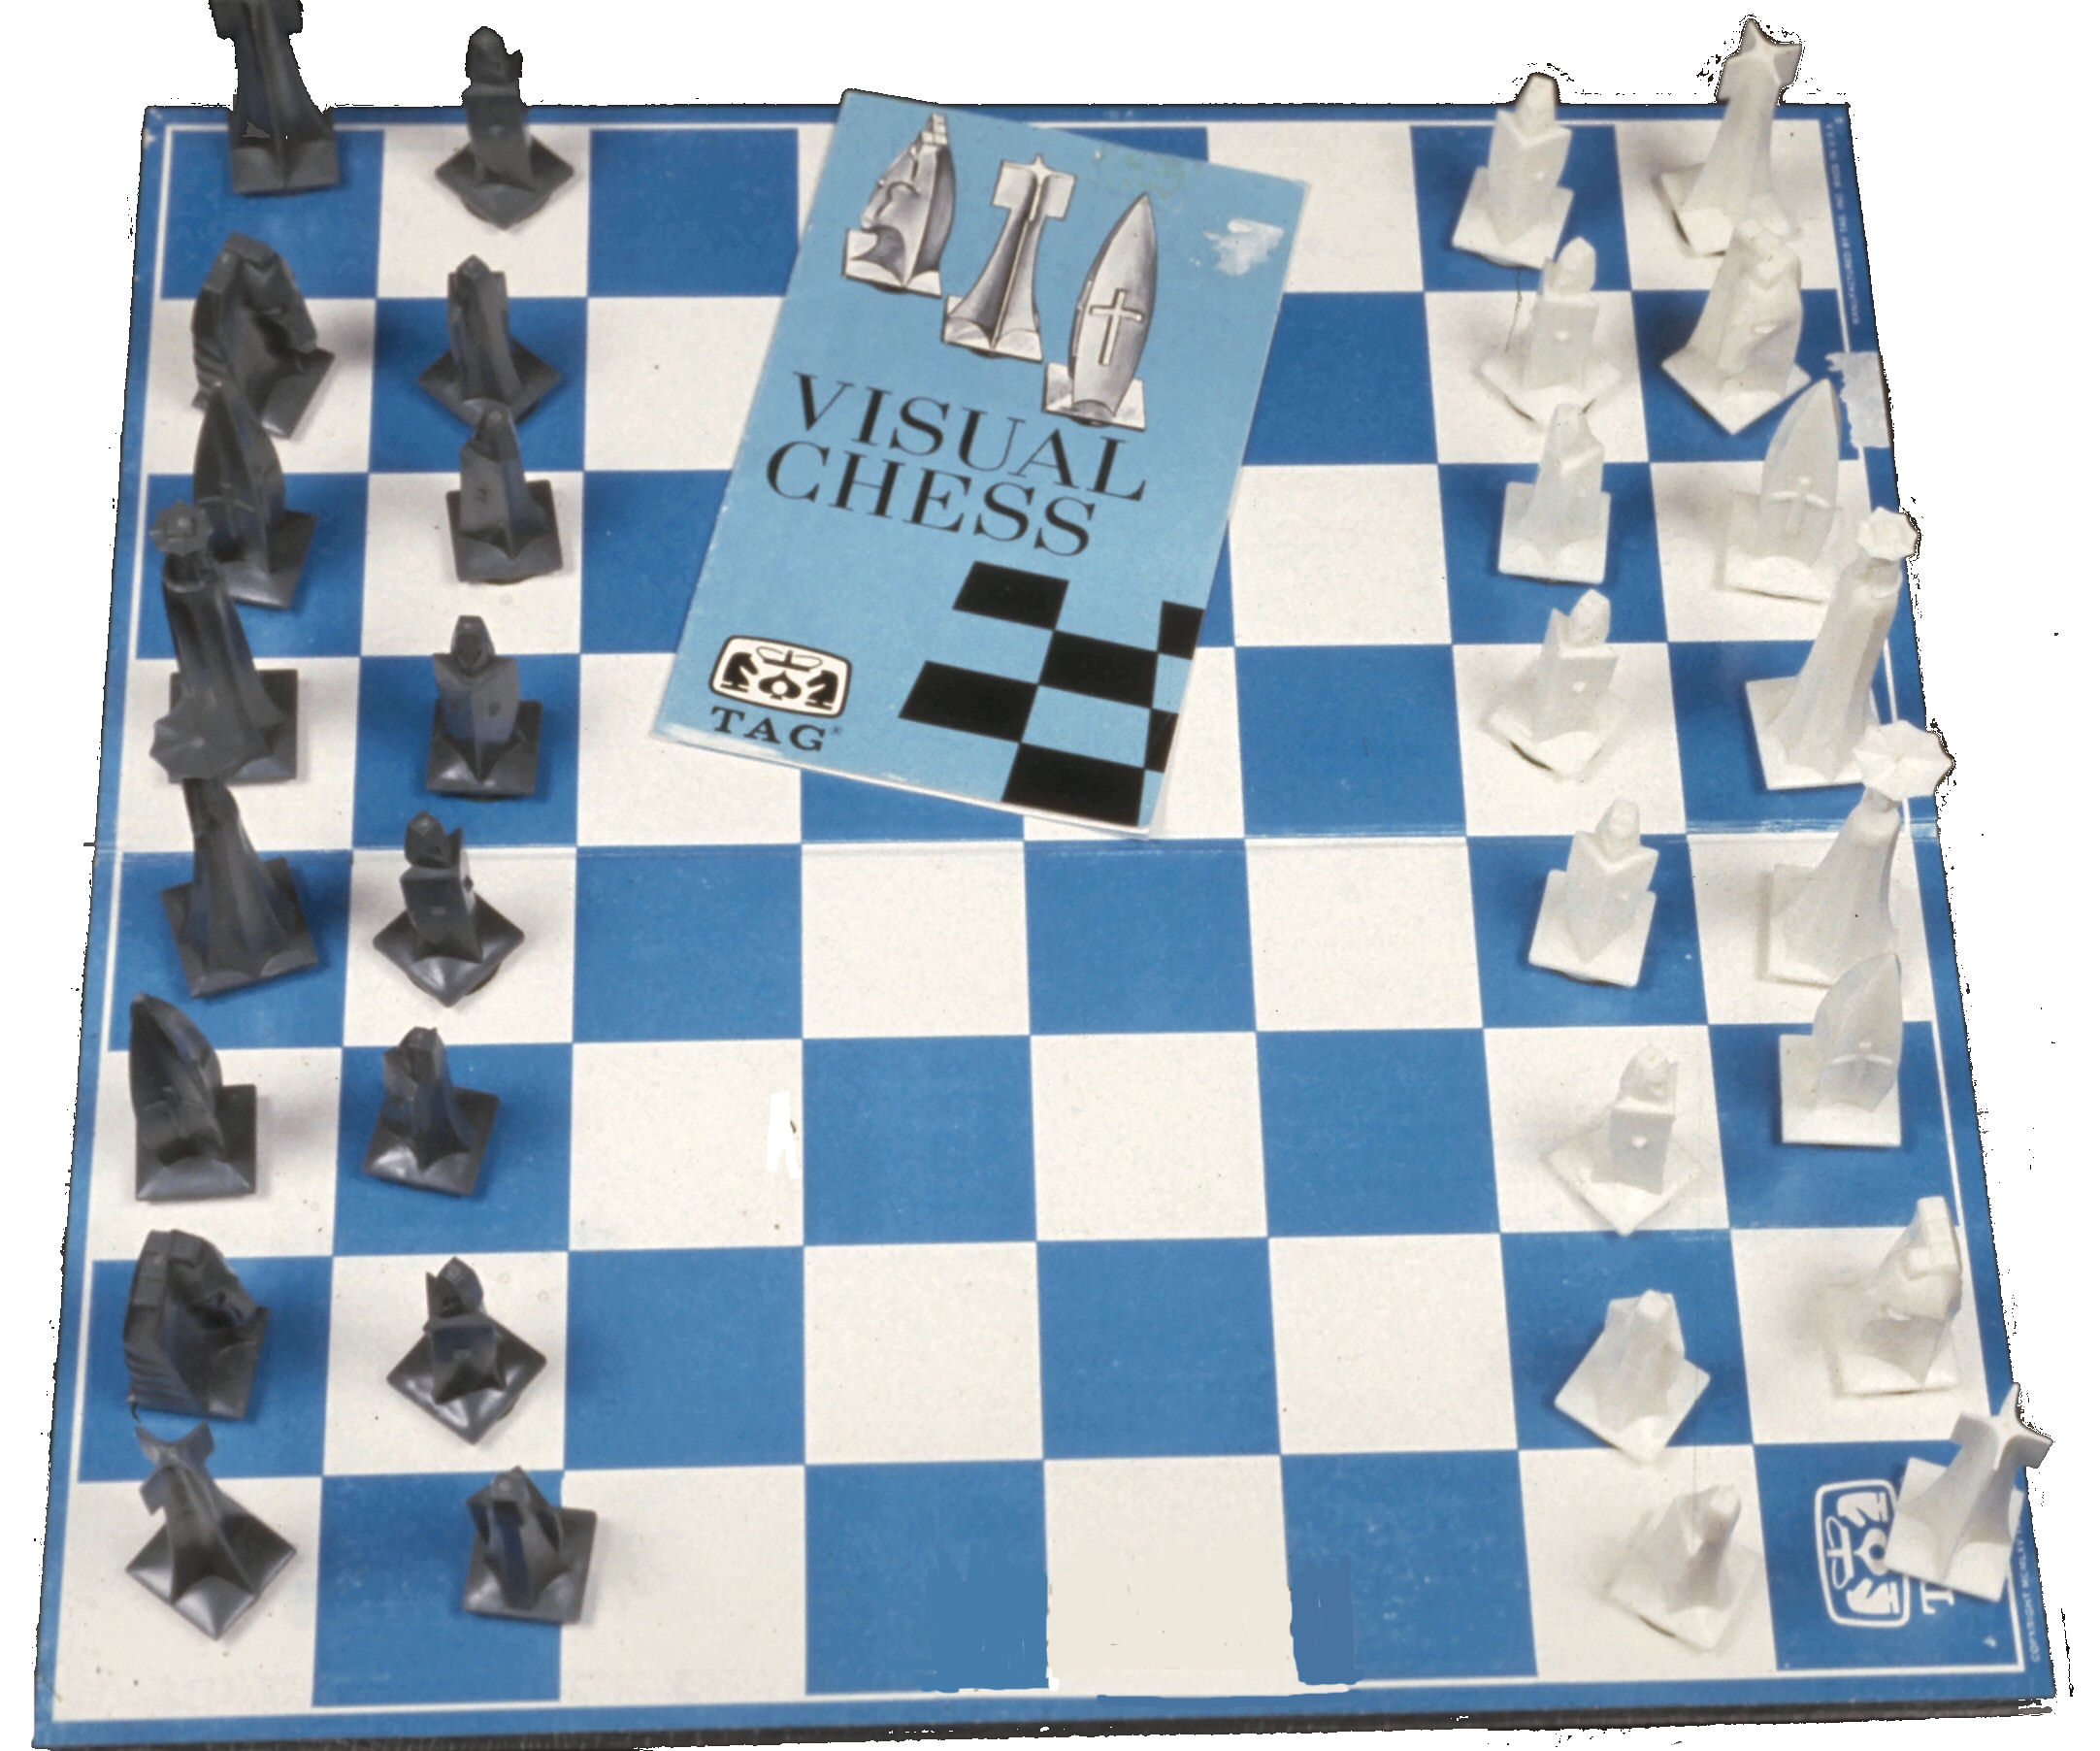 Visual chess set